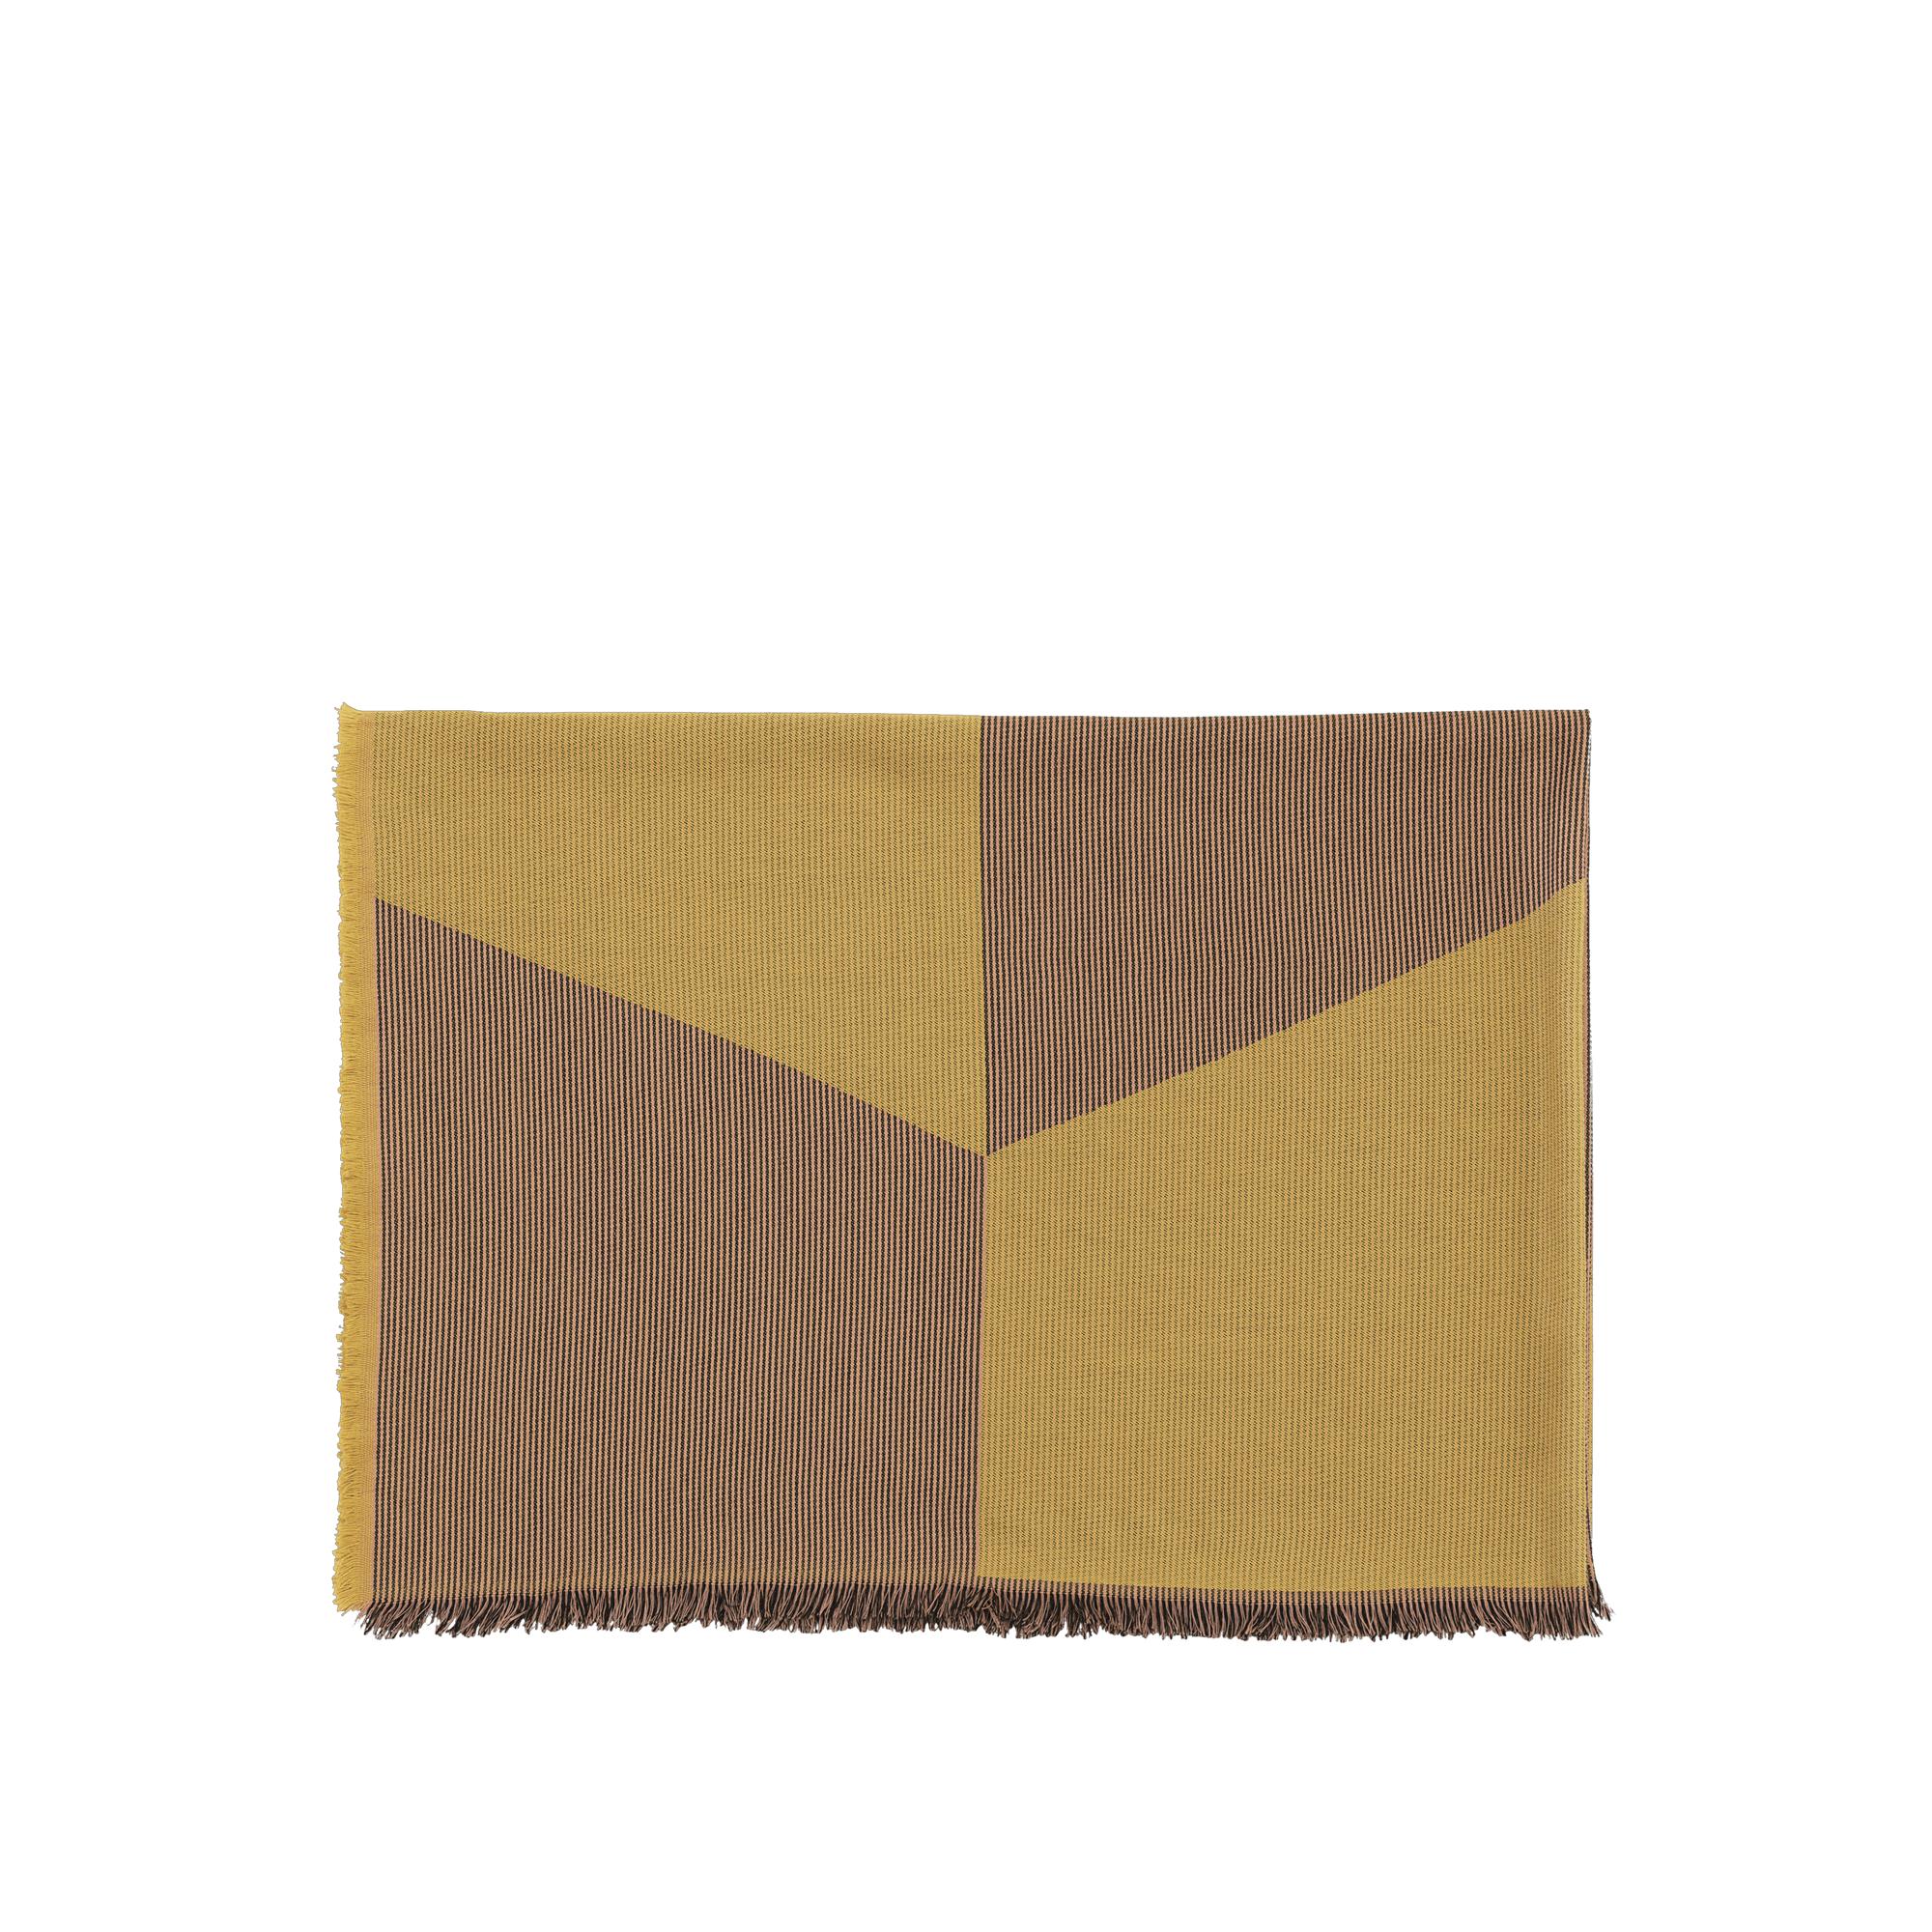 Muuto Sway Wool Blanket, Mustard Yellow